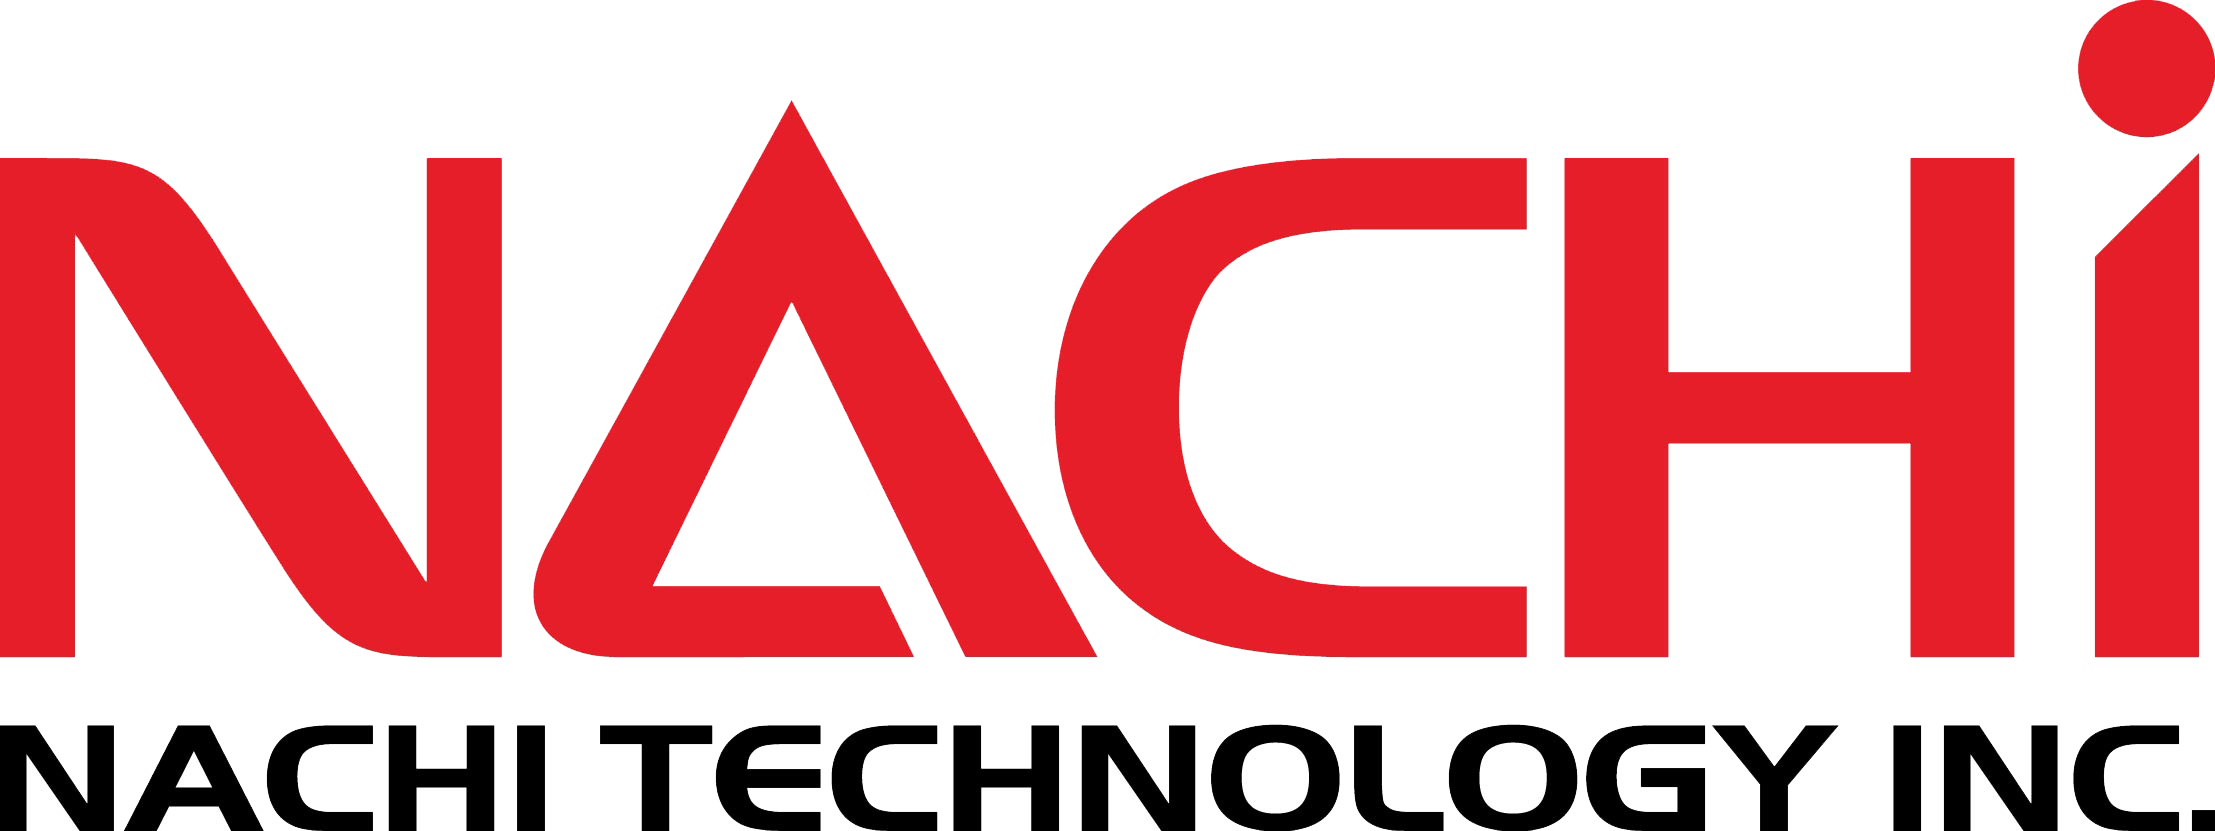 Nachi Technology Inc logo